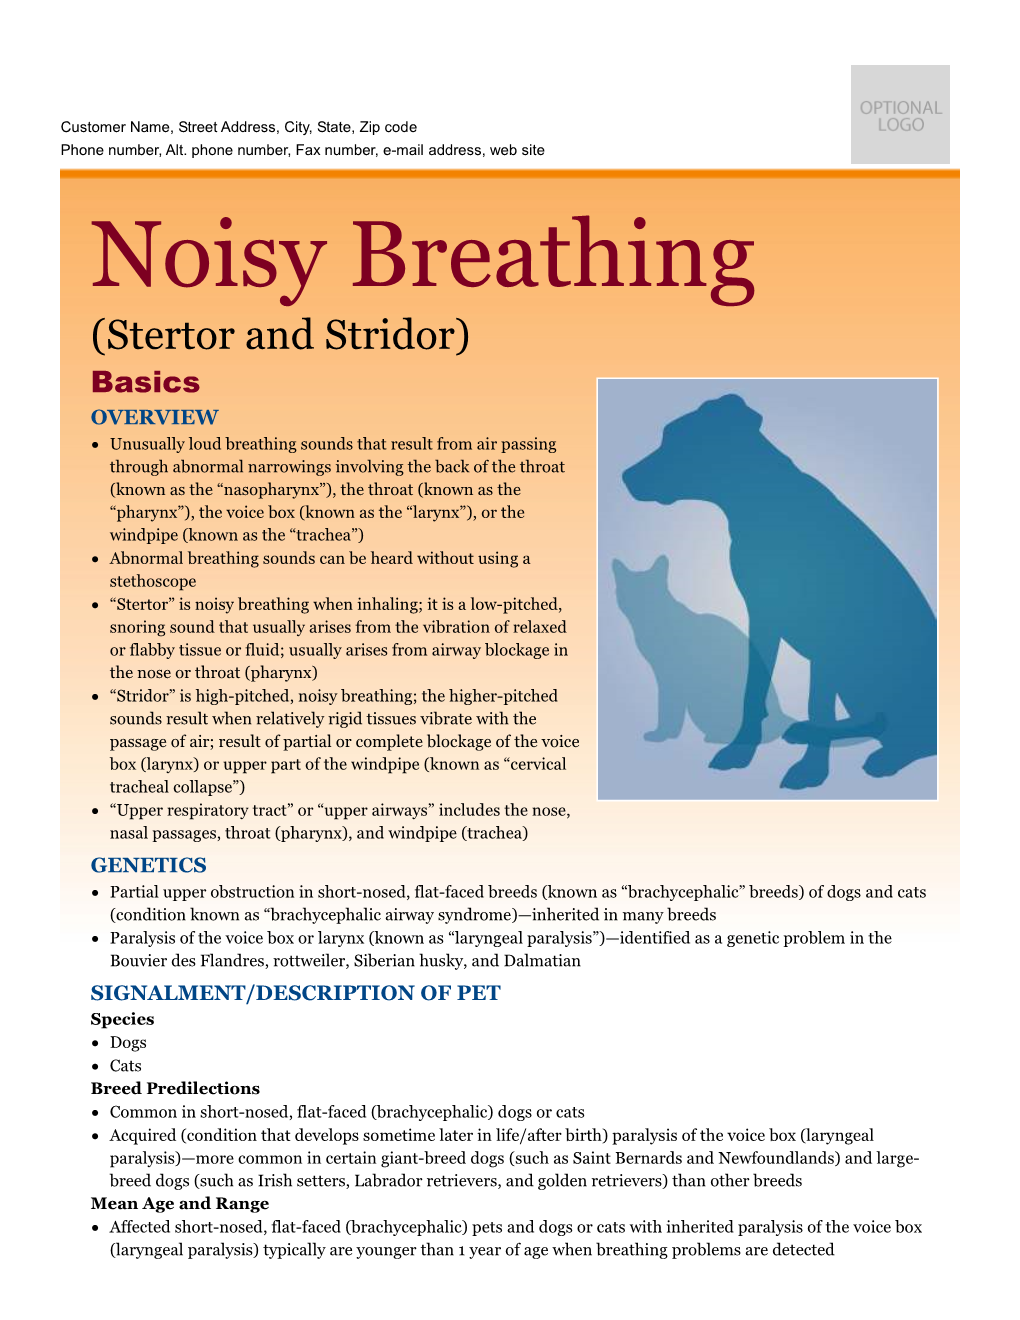 Noisy Breathing